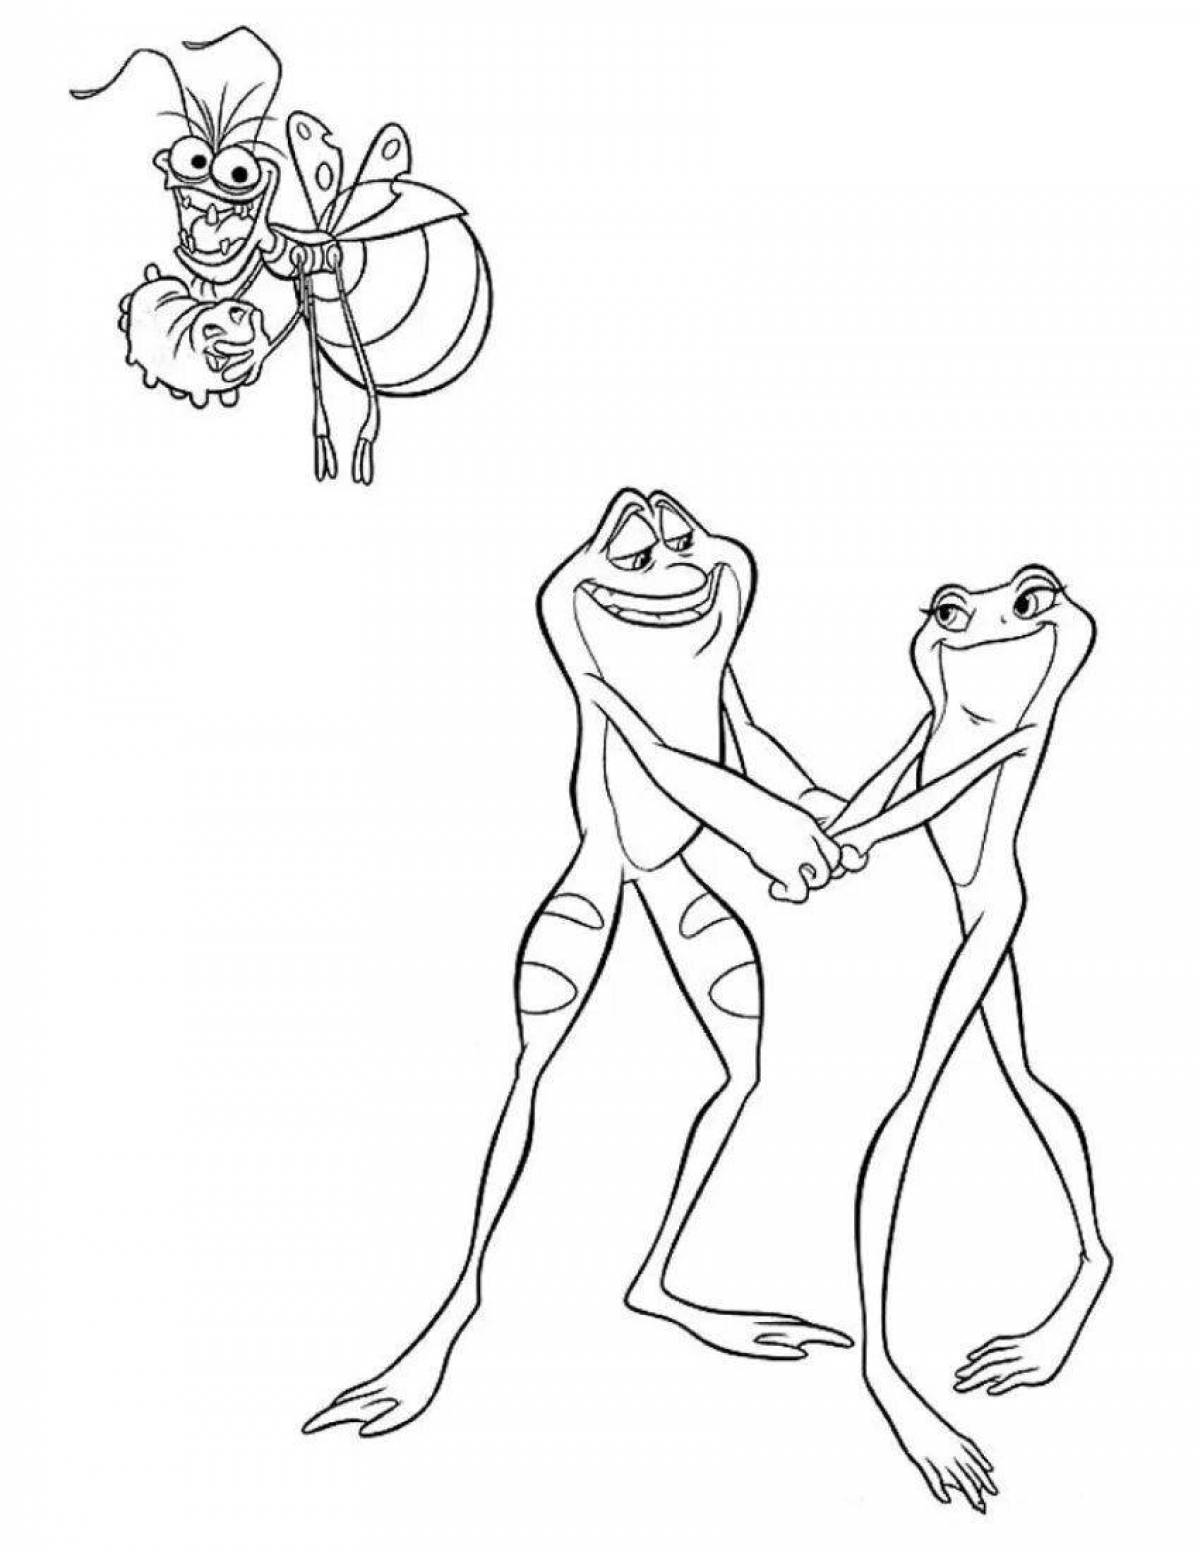 Coloring page playful frog princess